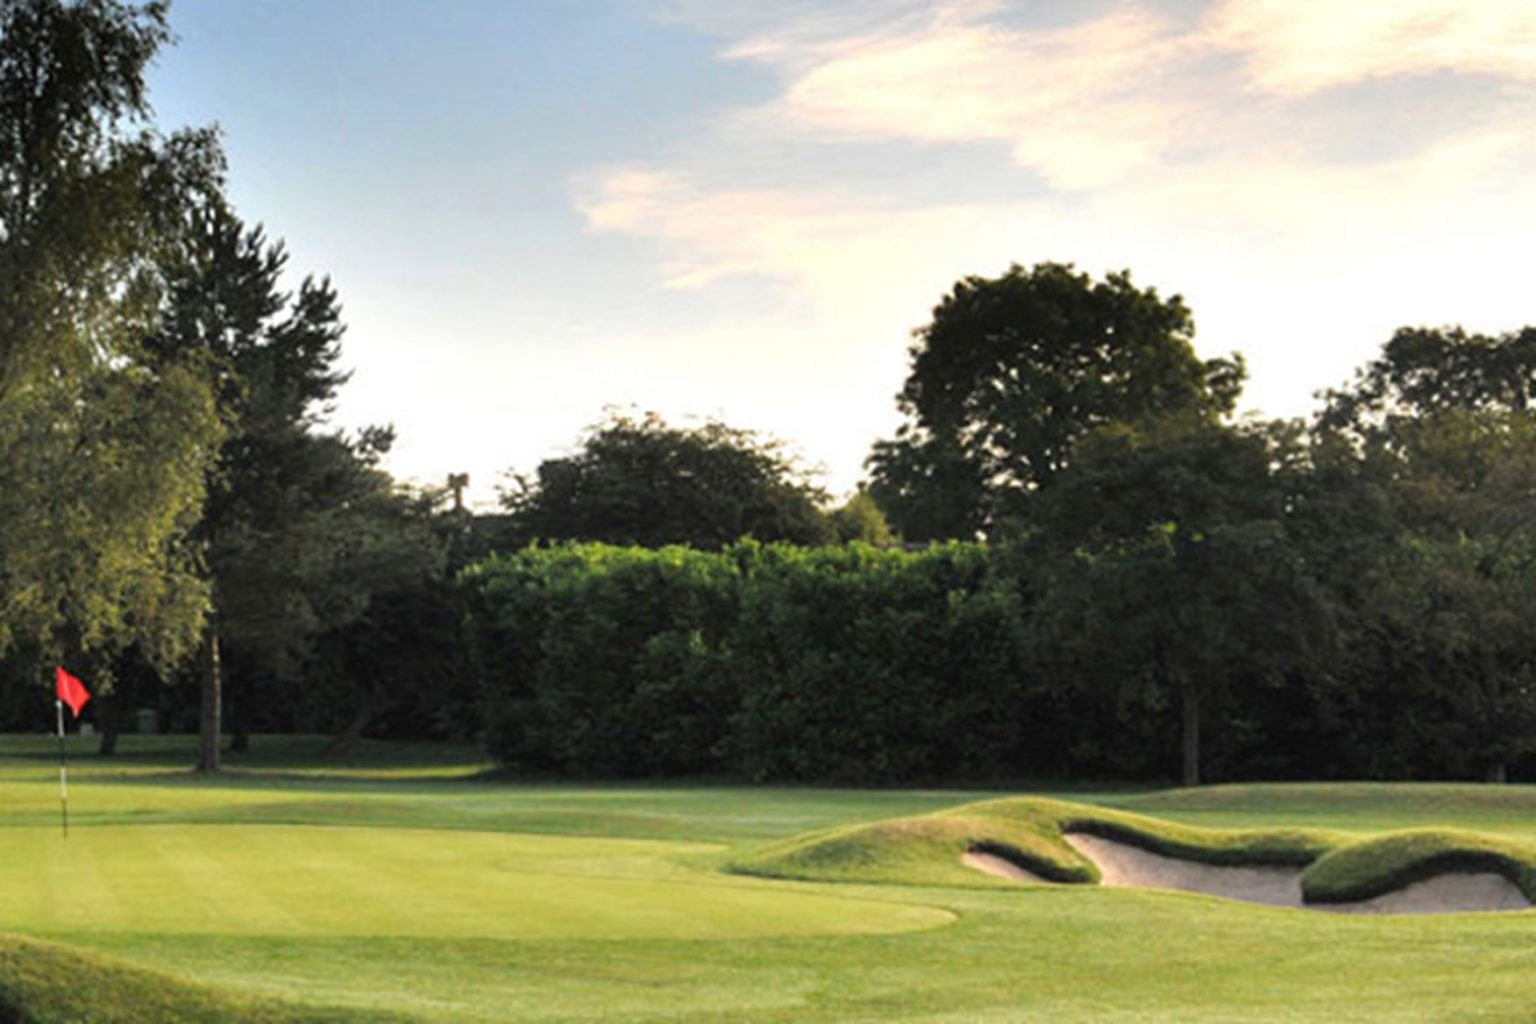 Ledene Golf Centre, pitch & putt in England